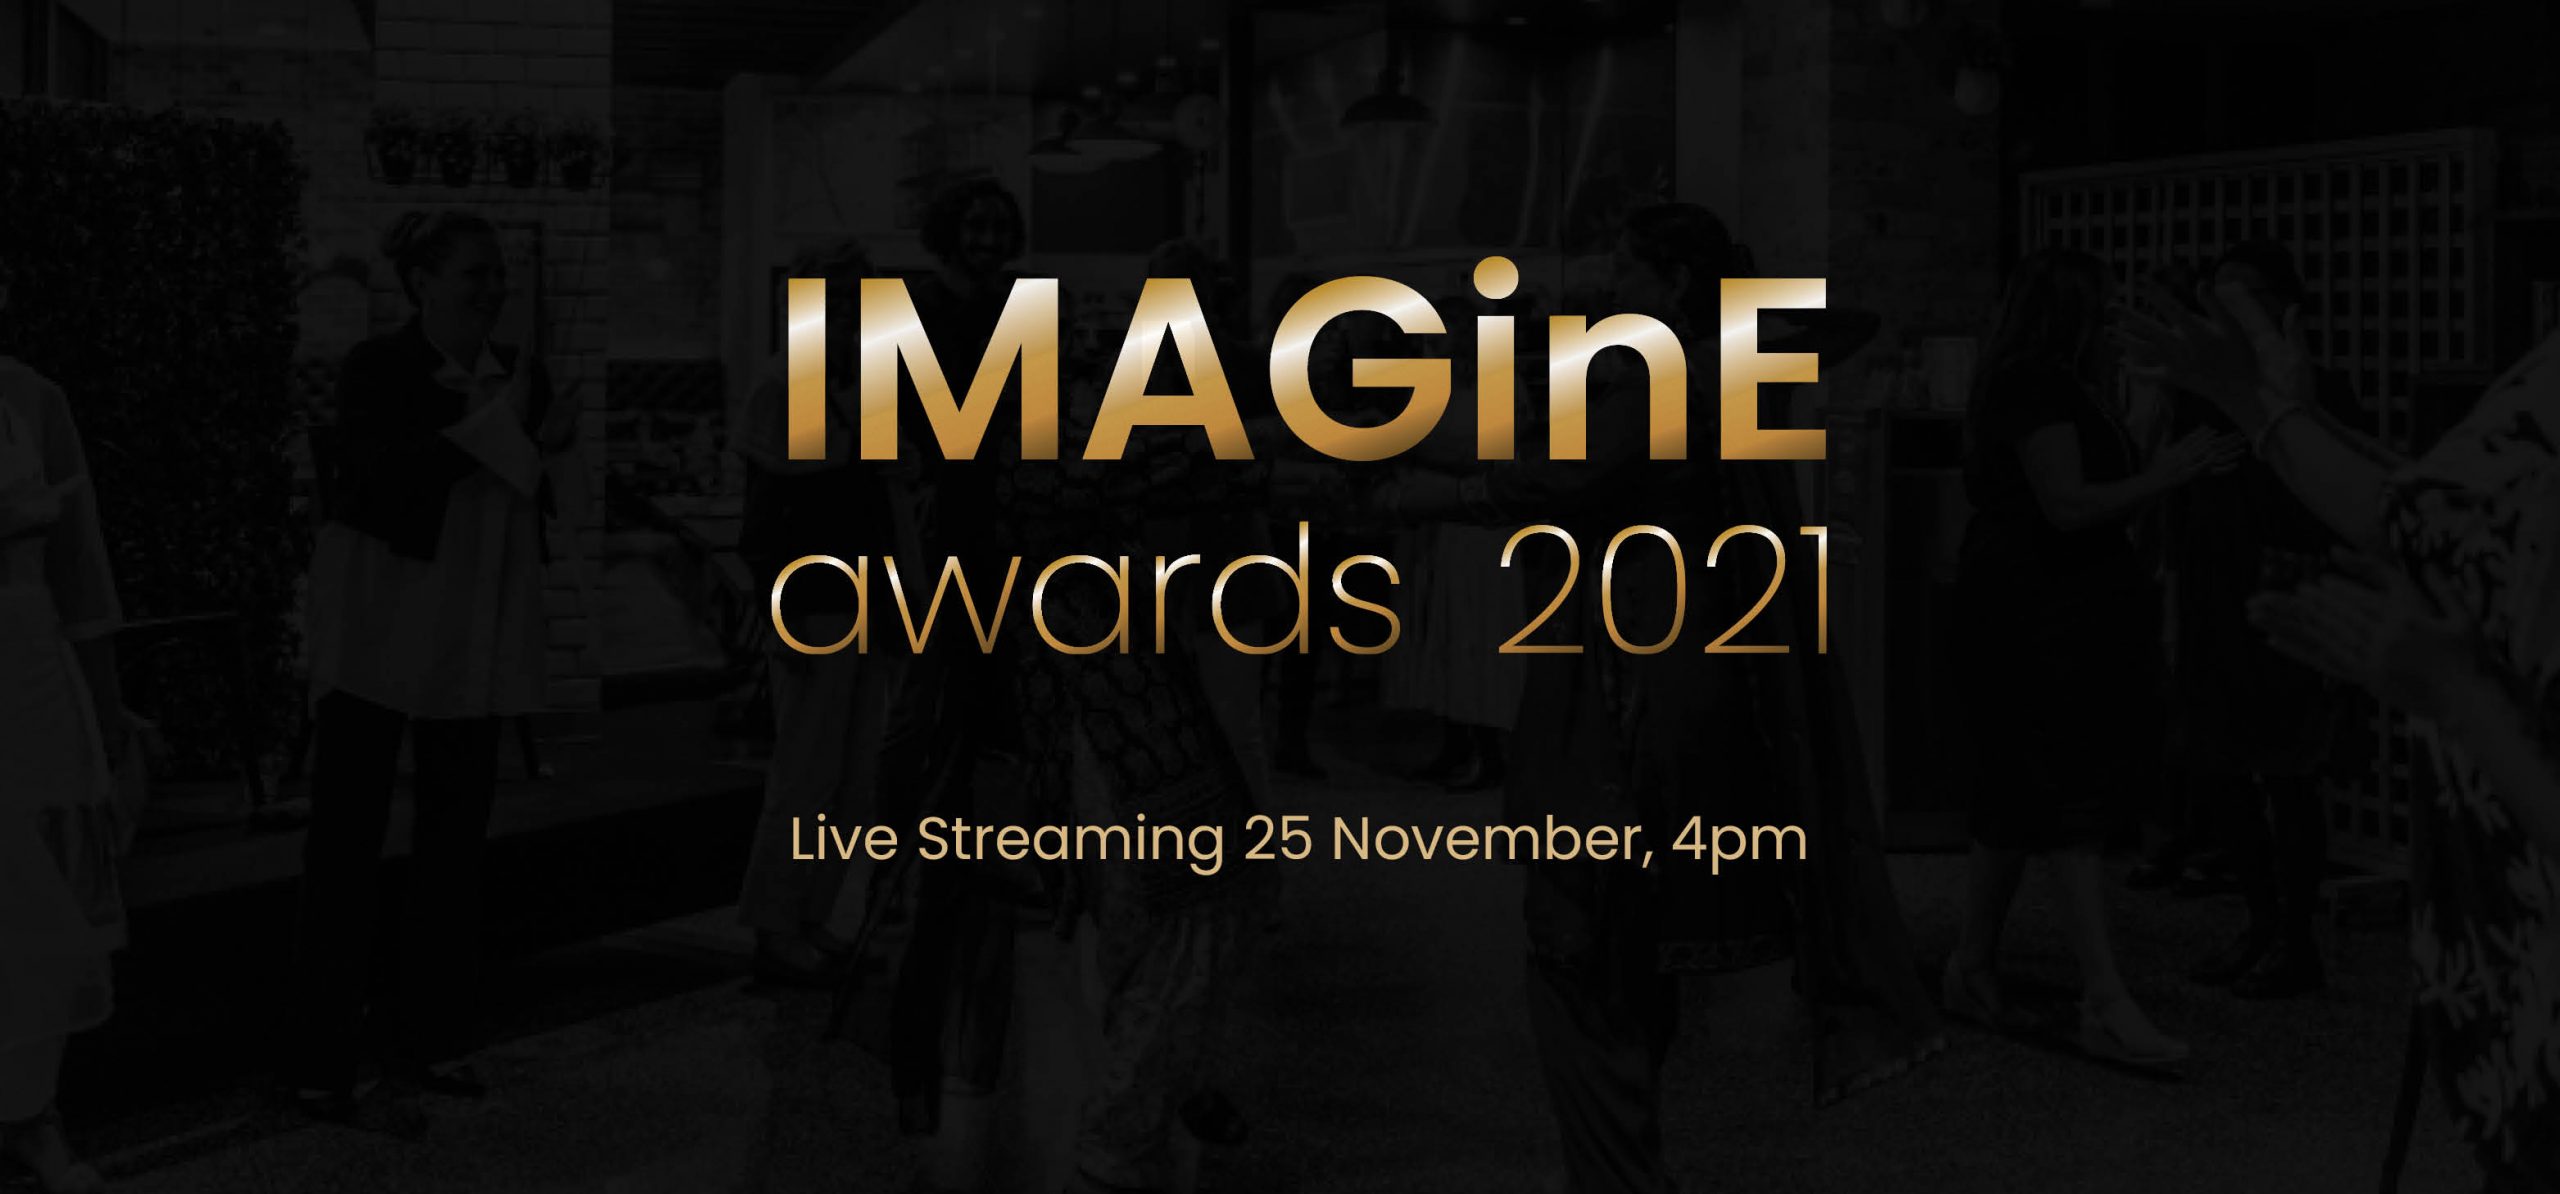 The 2021 IMAGinE Awards ceremony will be streaming live on Thursday 25 November, 4pm